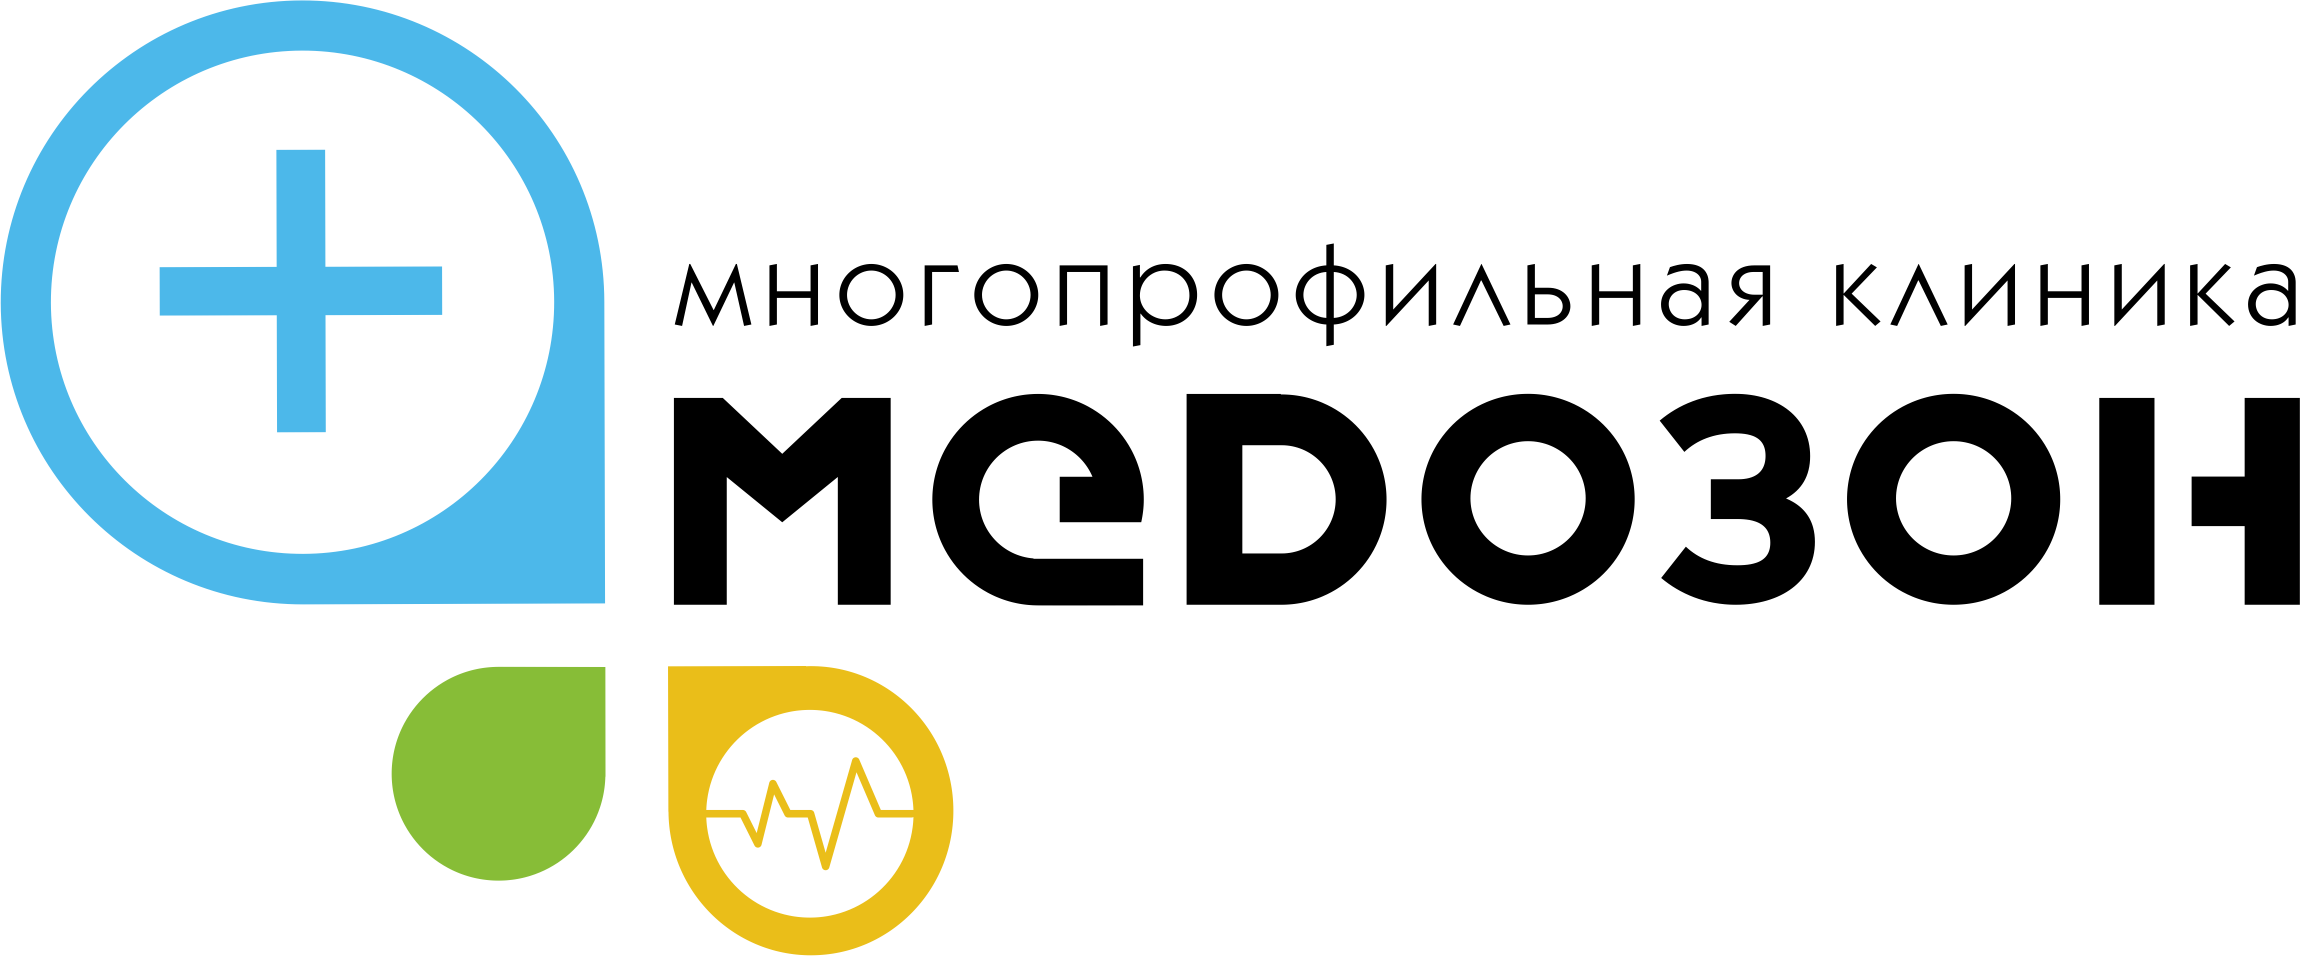 Медозон карбышева ульяновск. Медозон Ульяновск. Медозон логотип. Многопрофильная клиника Медозон Ульяновск. Логотипы проктологических центров.